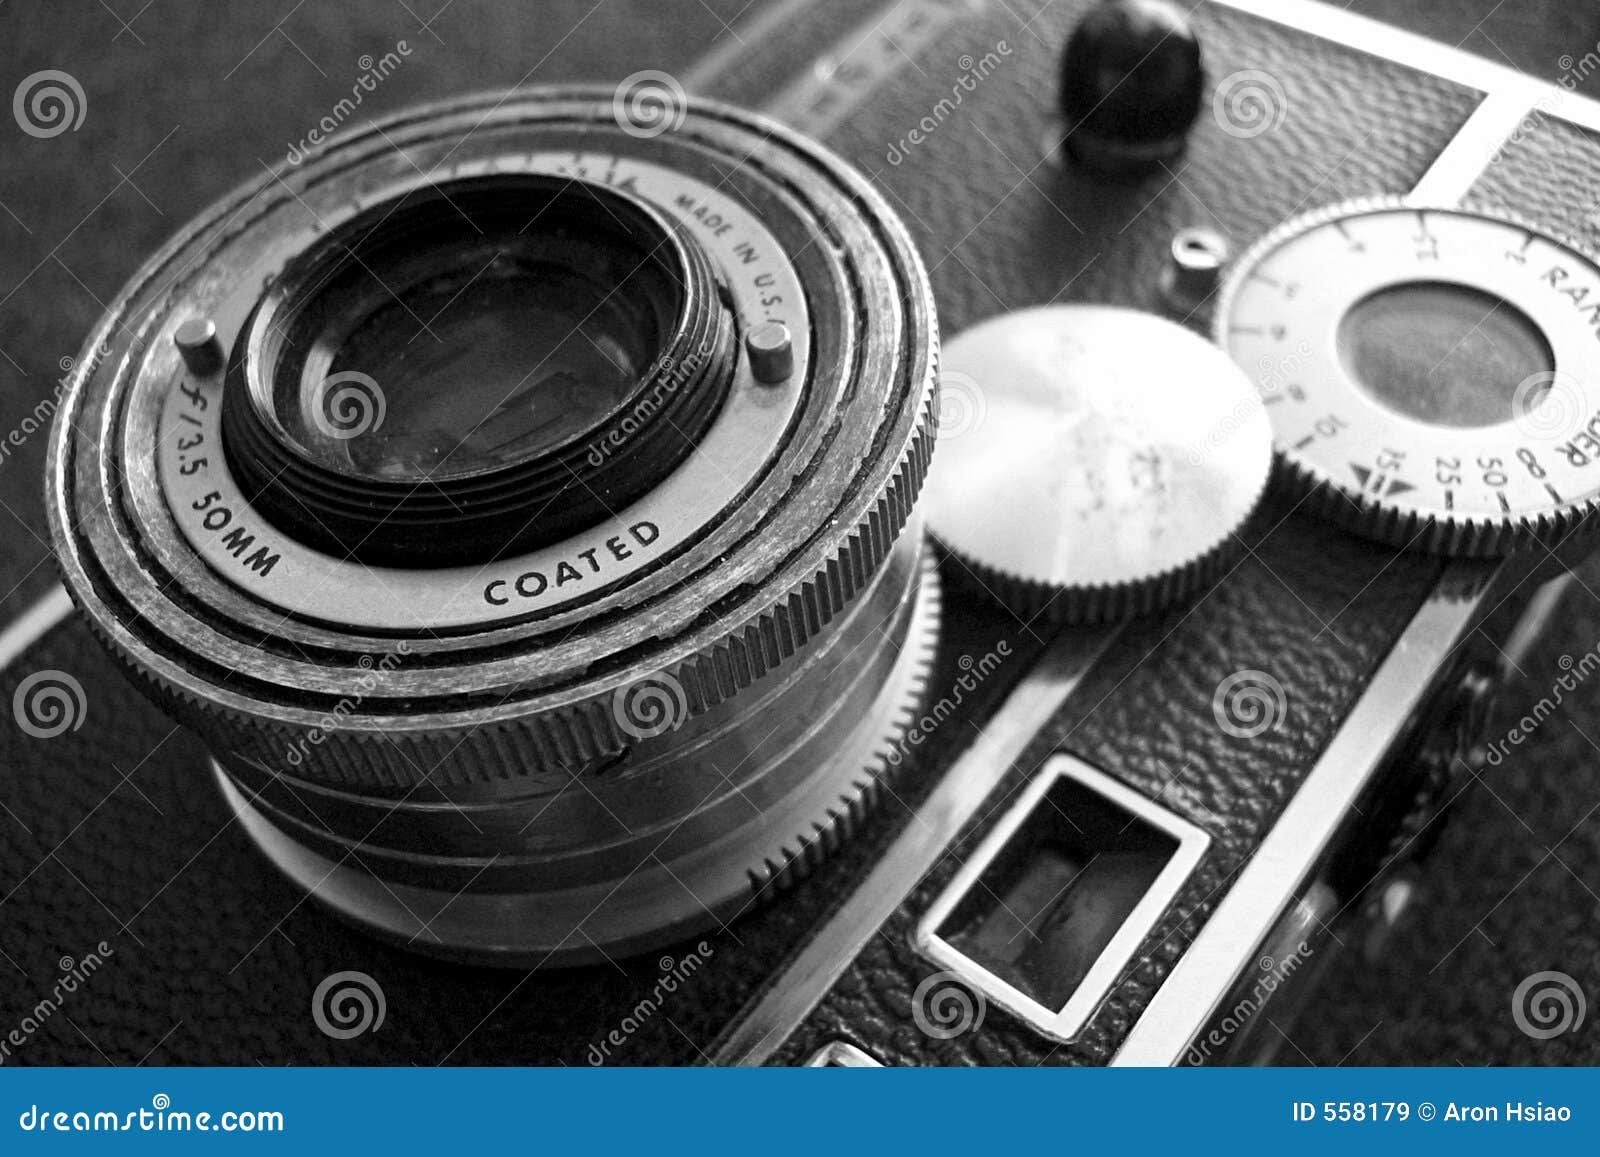 vintage camera, black and white